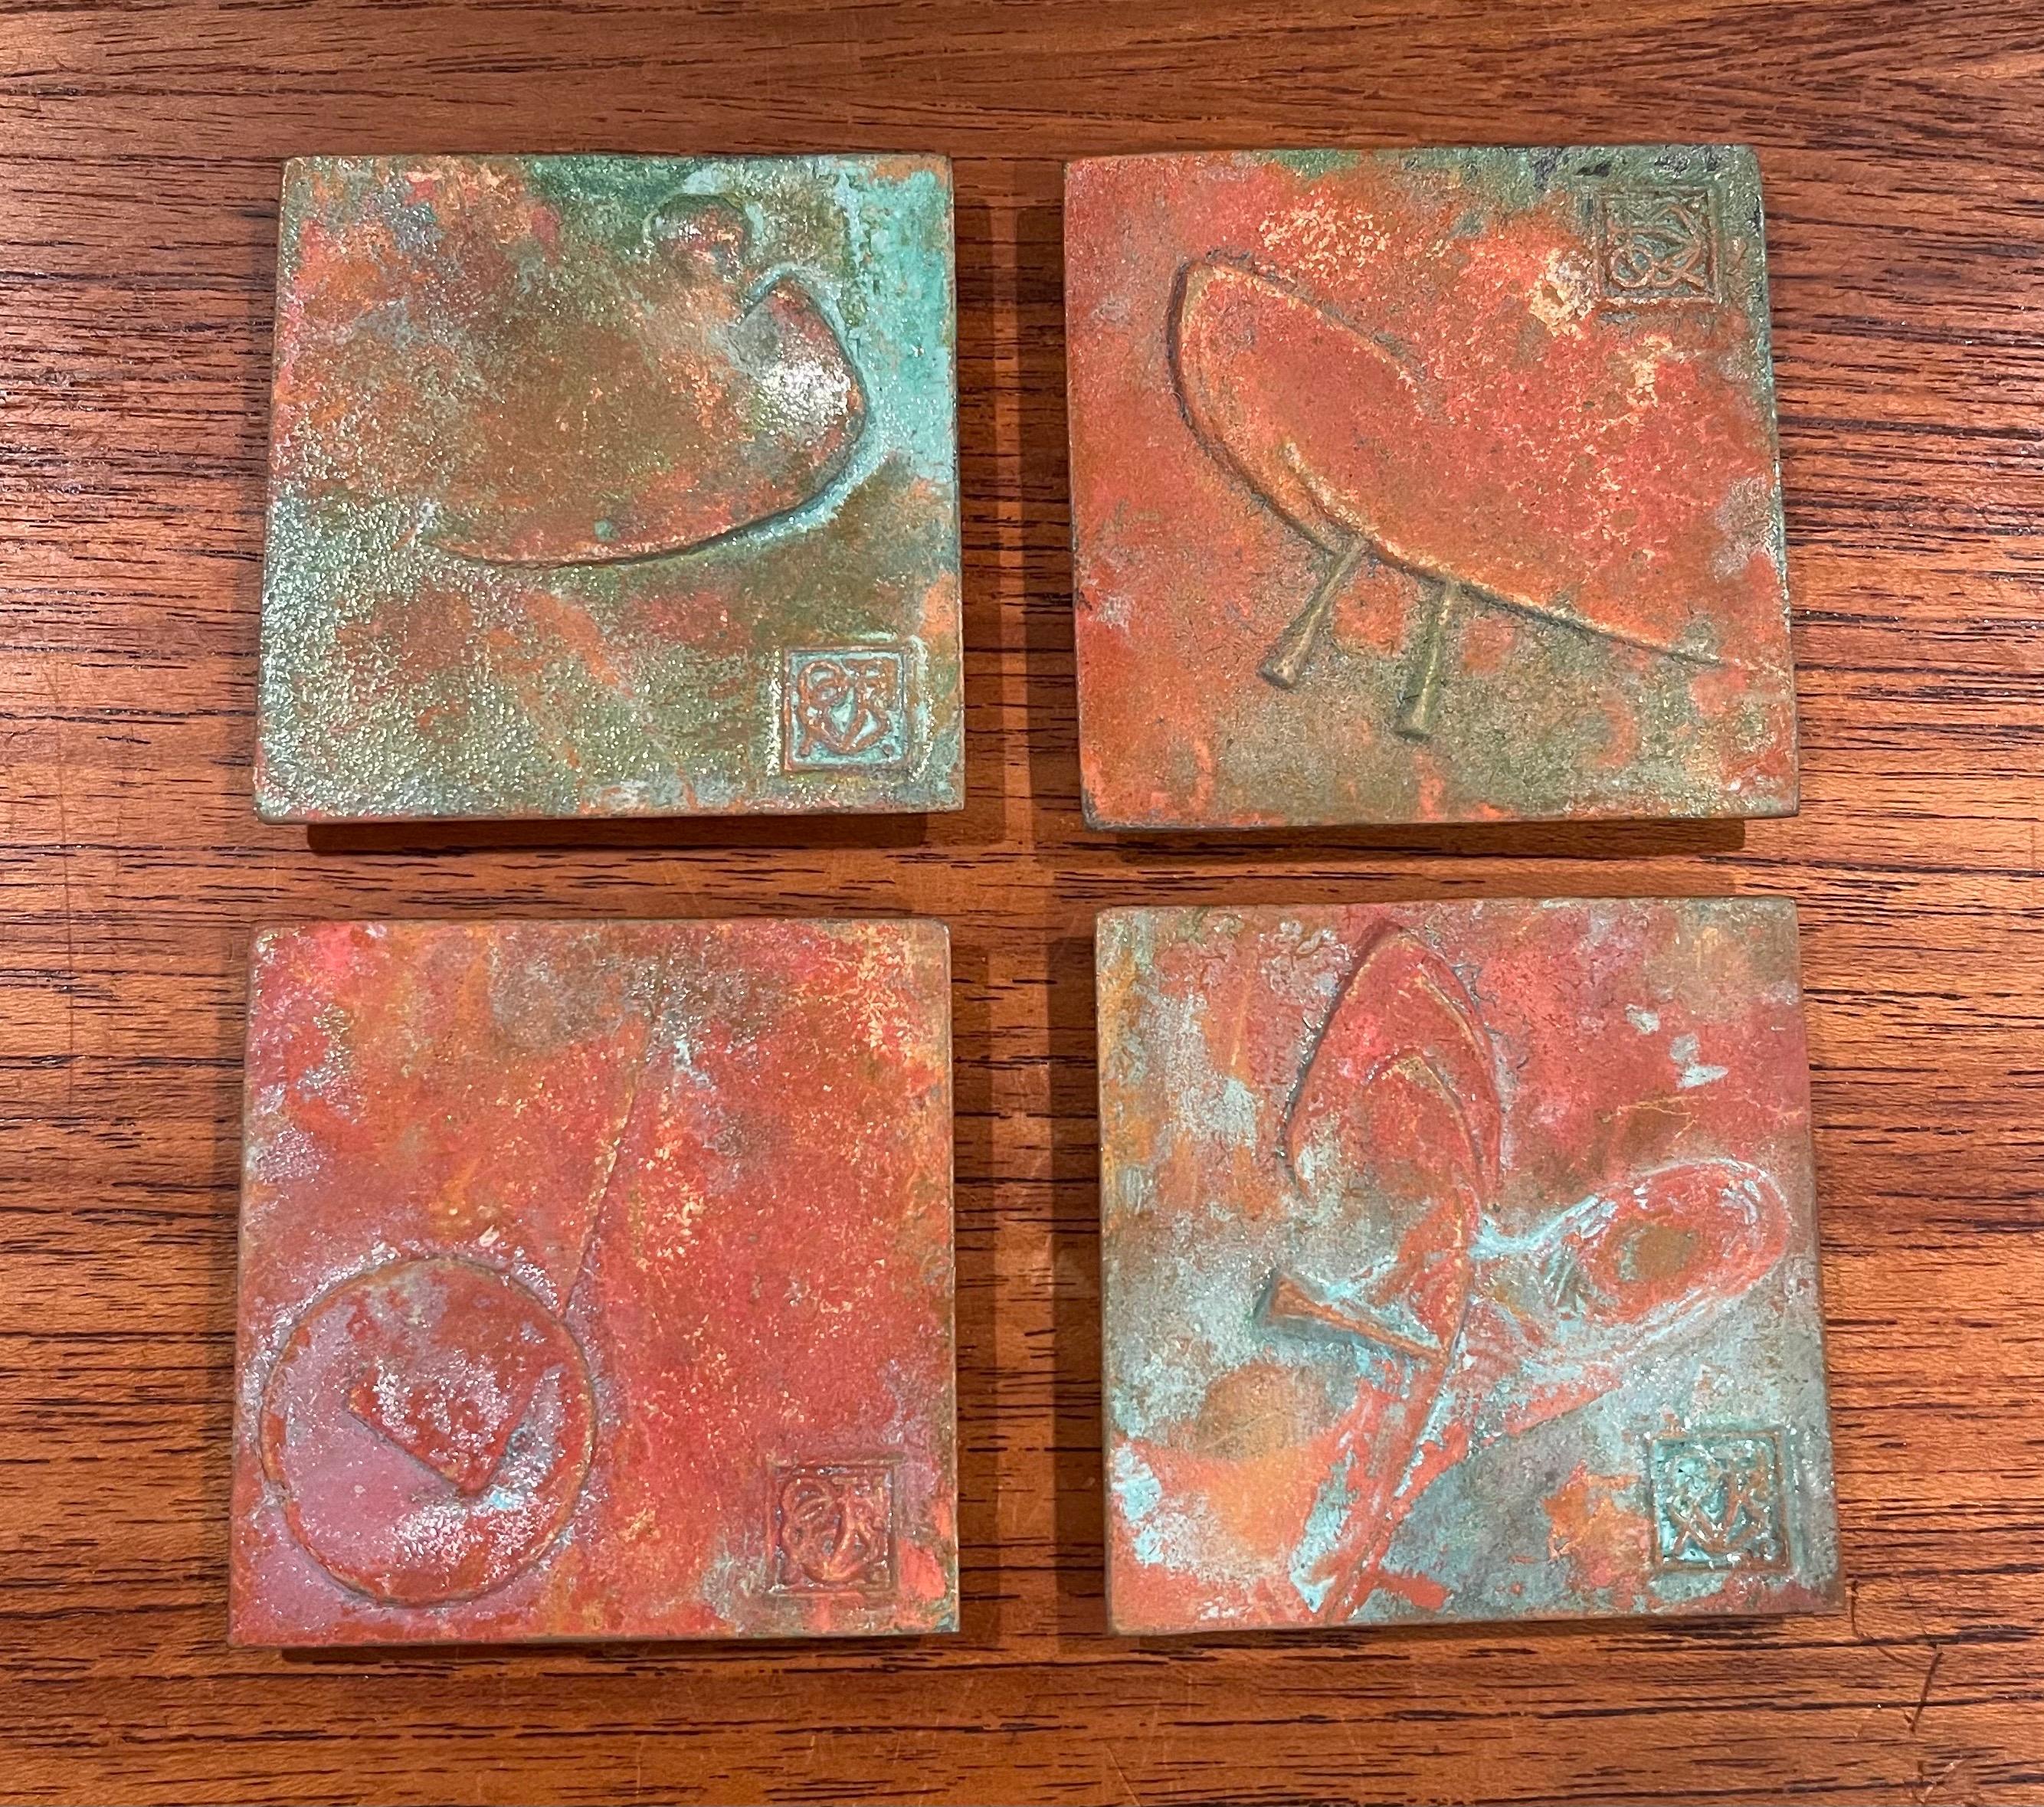 Set of four bronze Cosanti tiles by Paolo Soleri, circa 1990s. The tiles measure 2.5